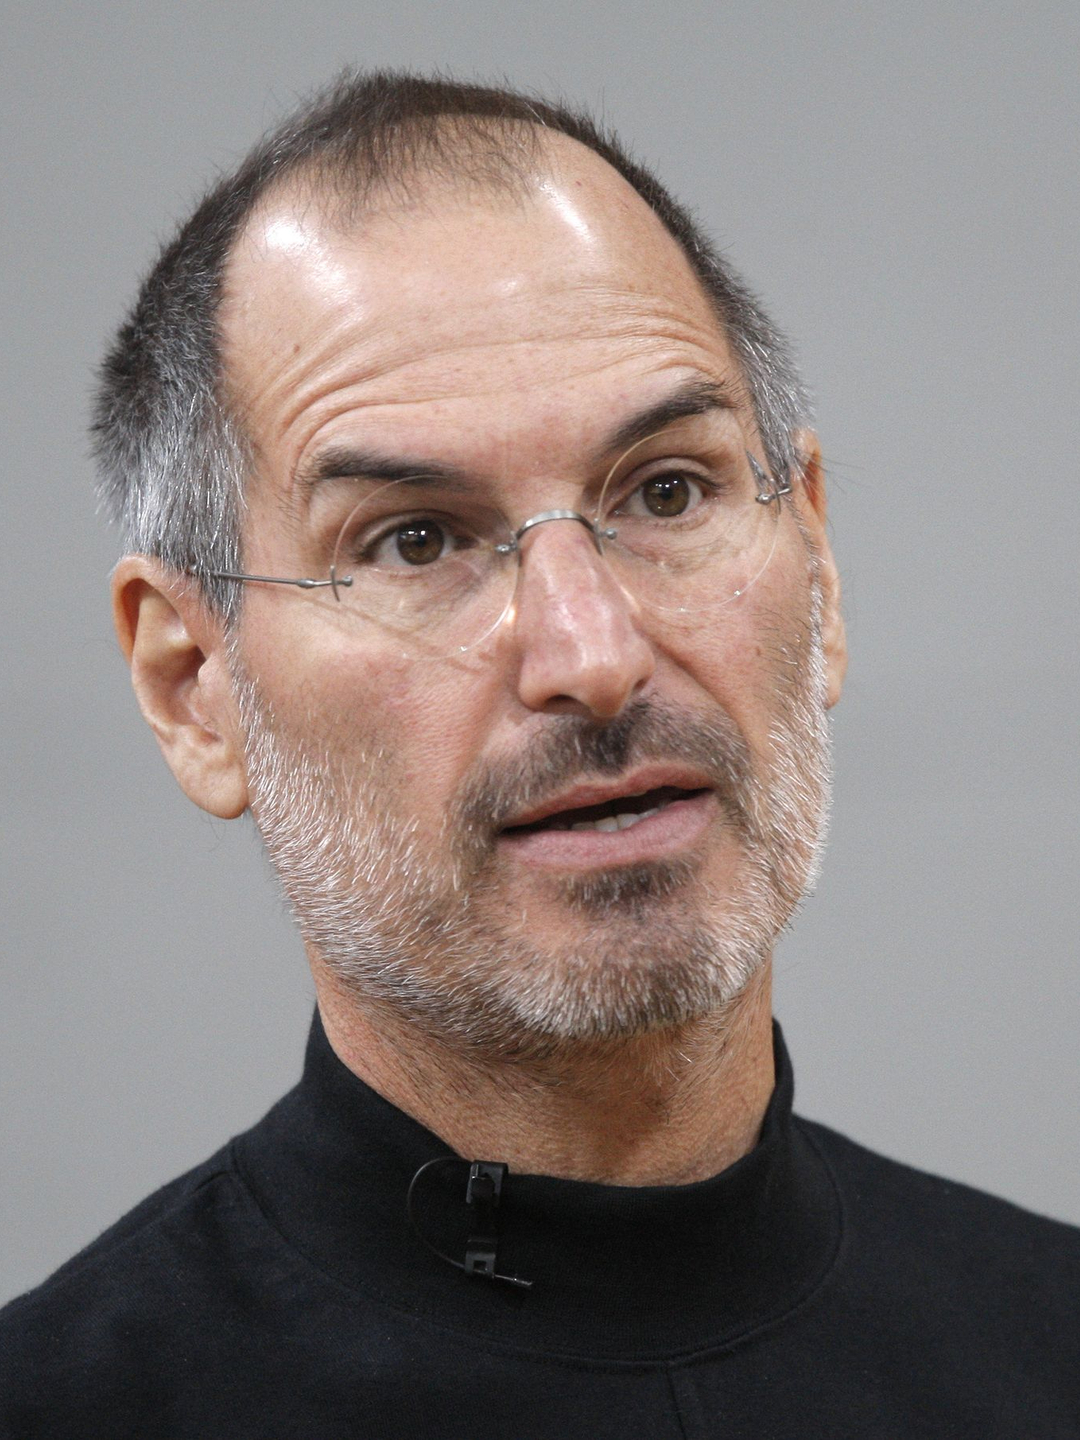 Steve Jobs main achievements